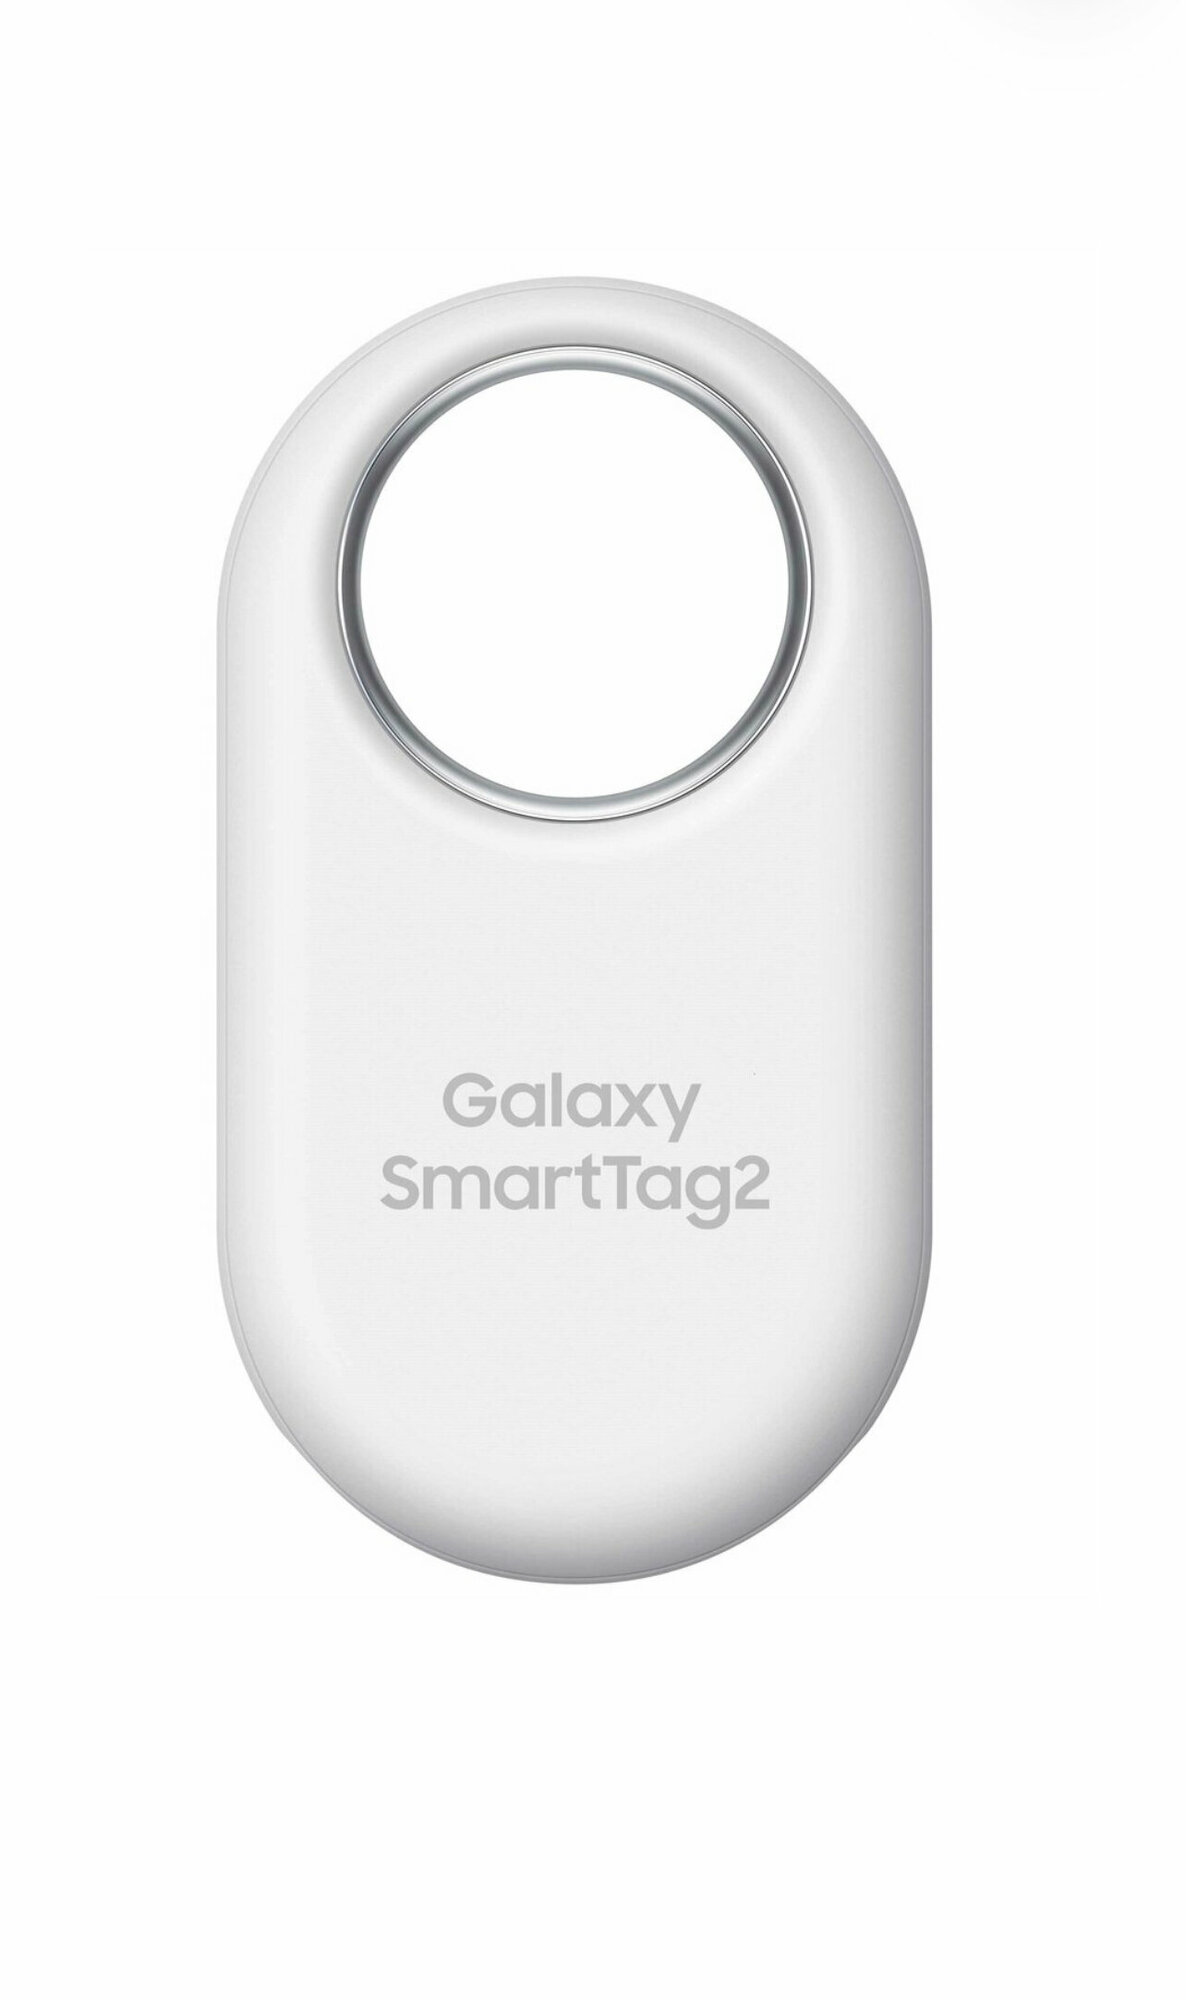 Беспроводная метка Samsung Galaxy SmartTag2 EI-T5600 белая